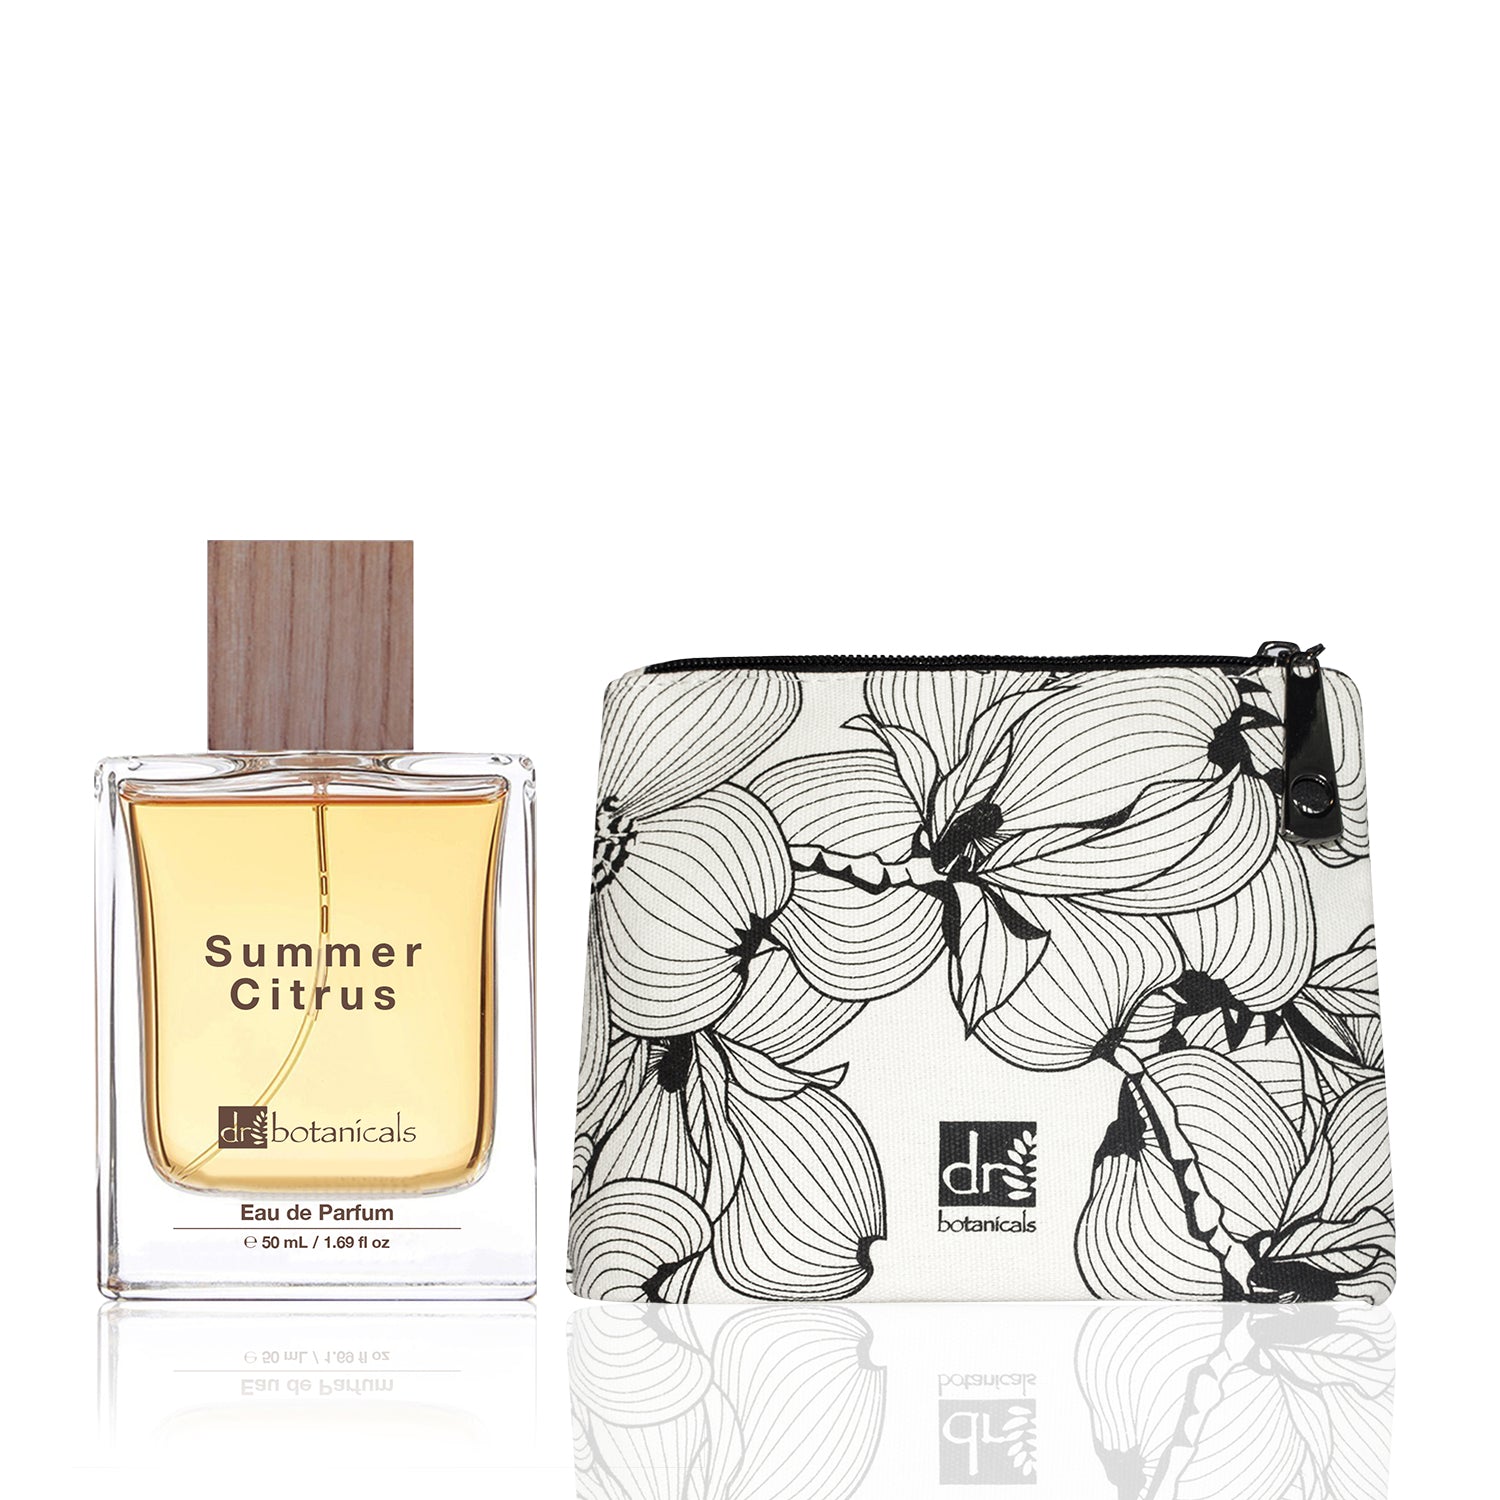 Beauty Bag + DB Citrus Summer - Eau de Parfum